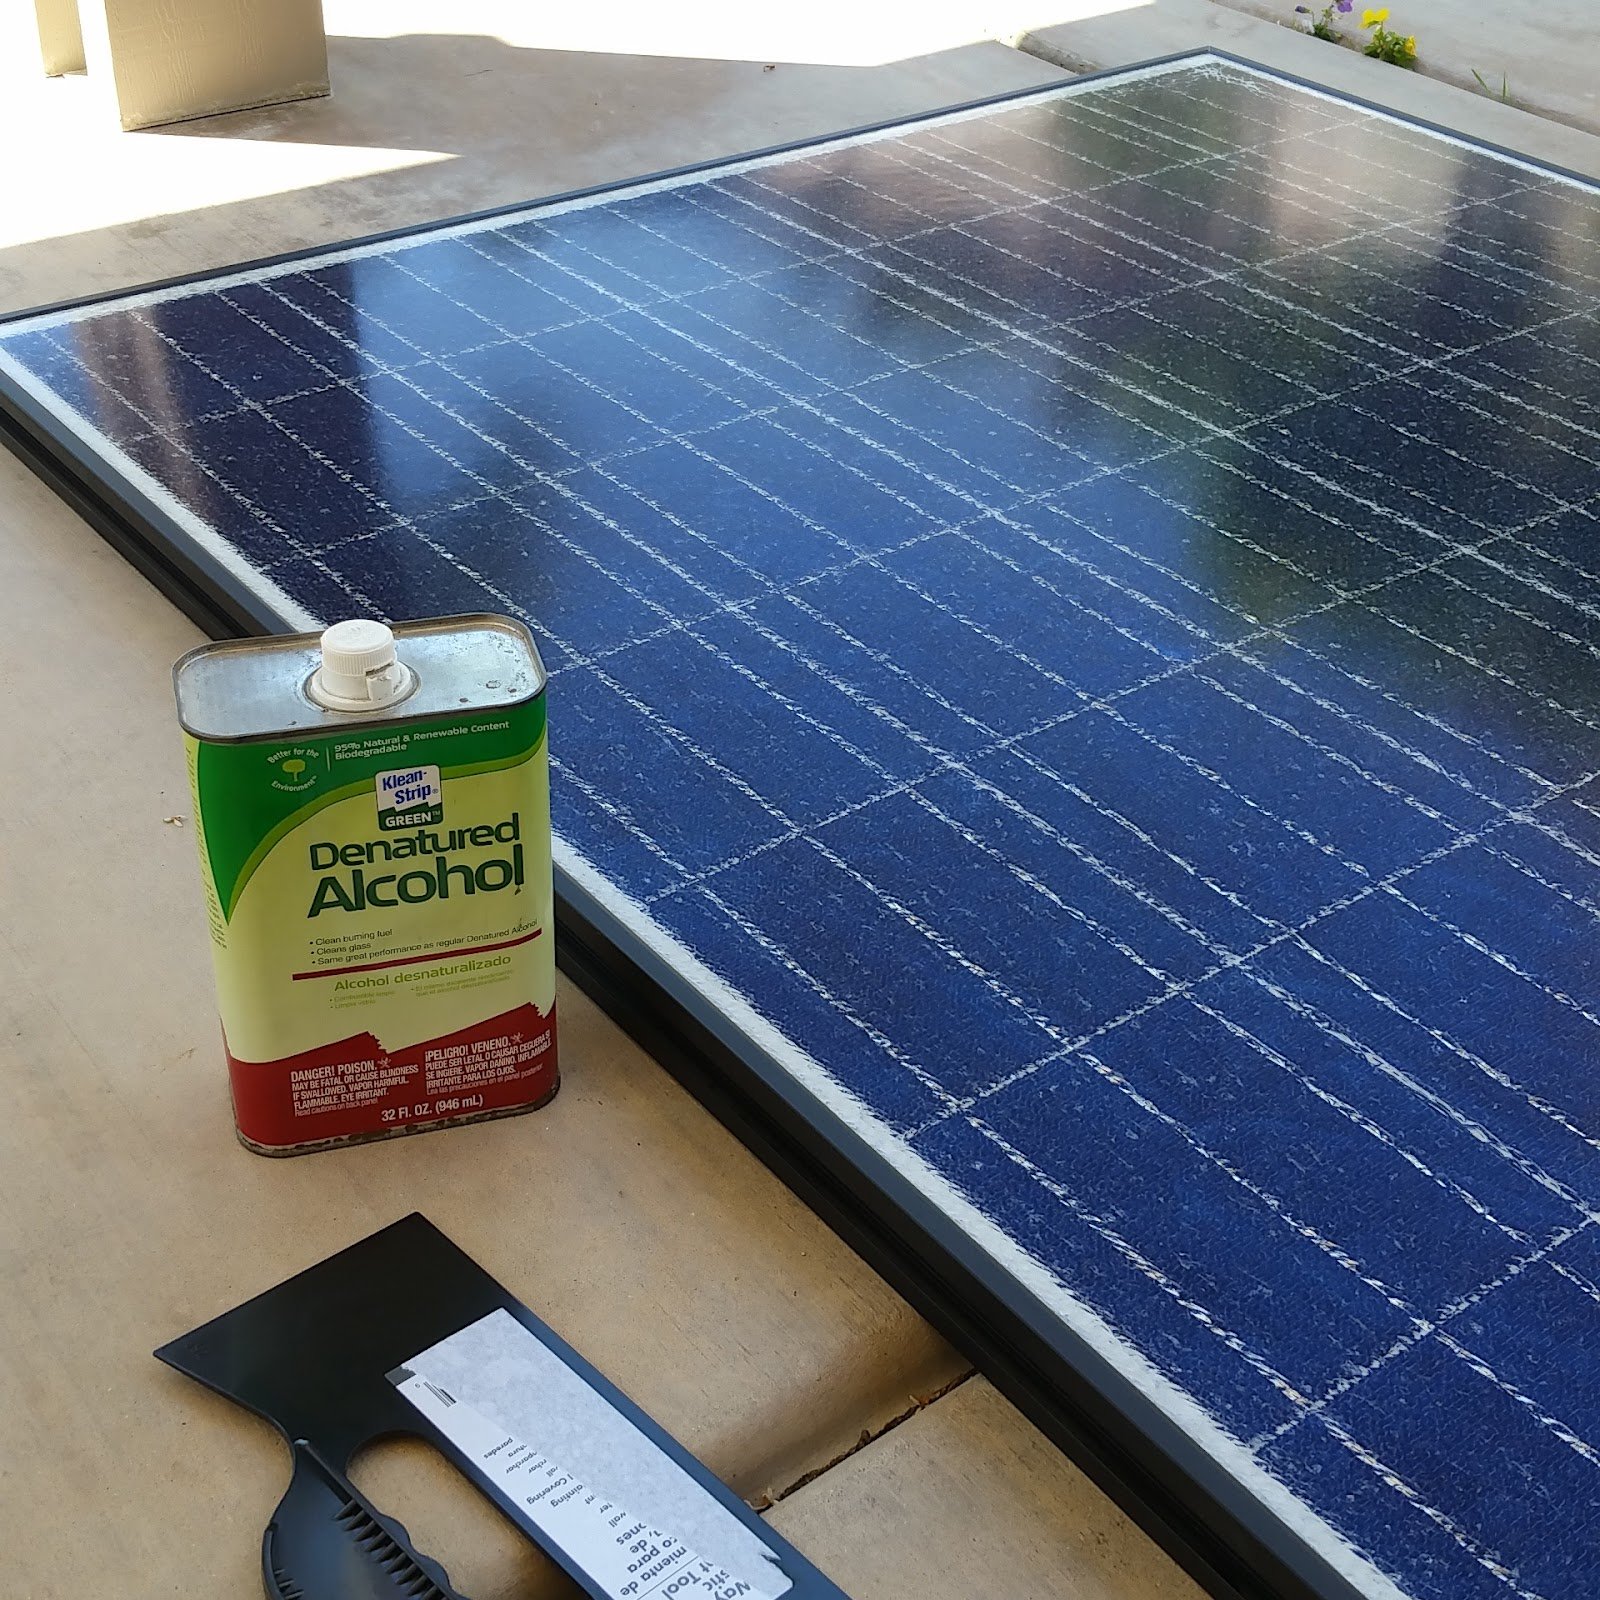 Repairing broken solar panels